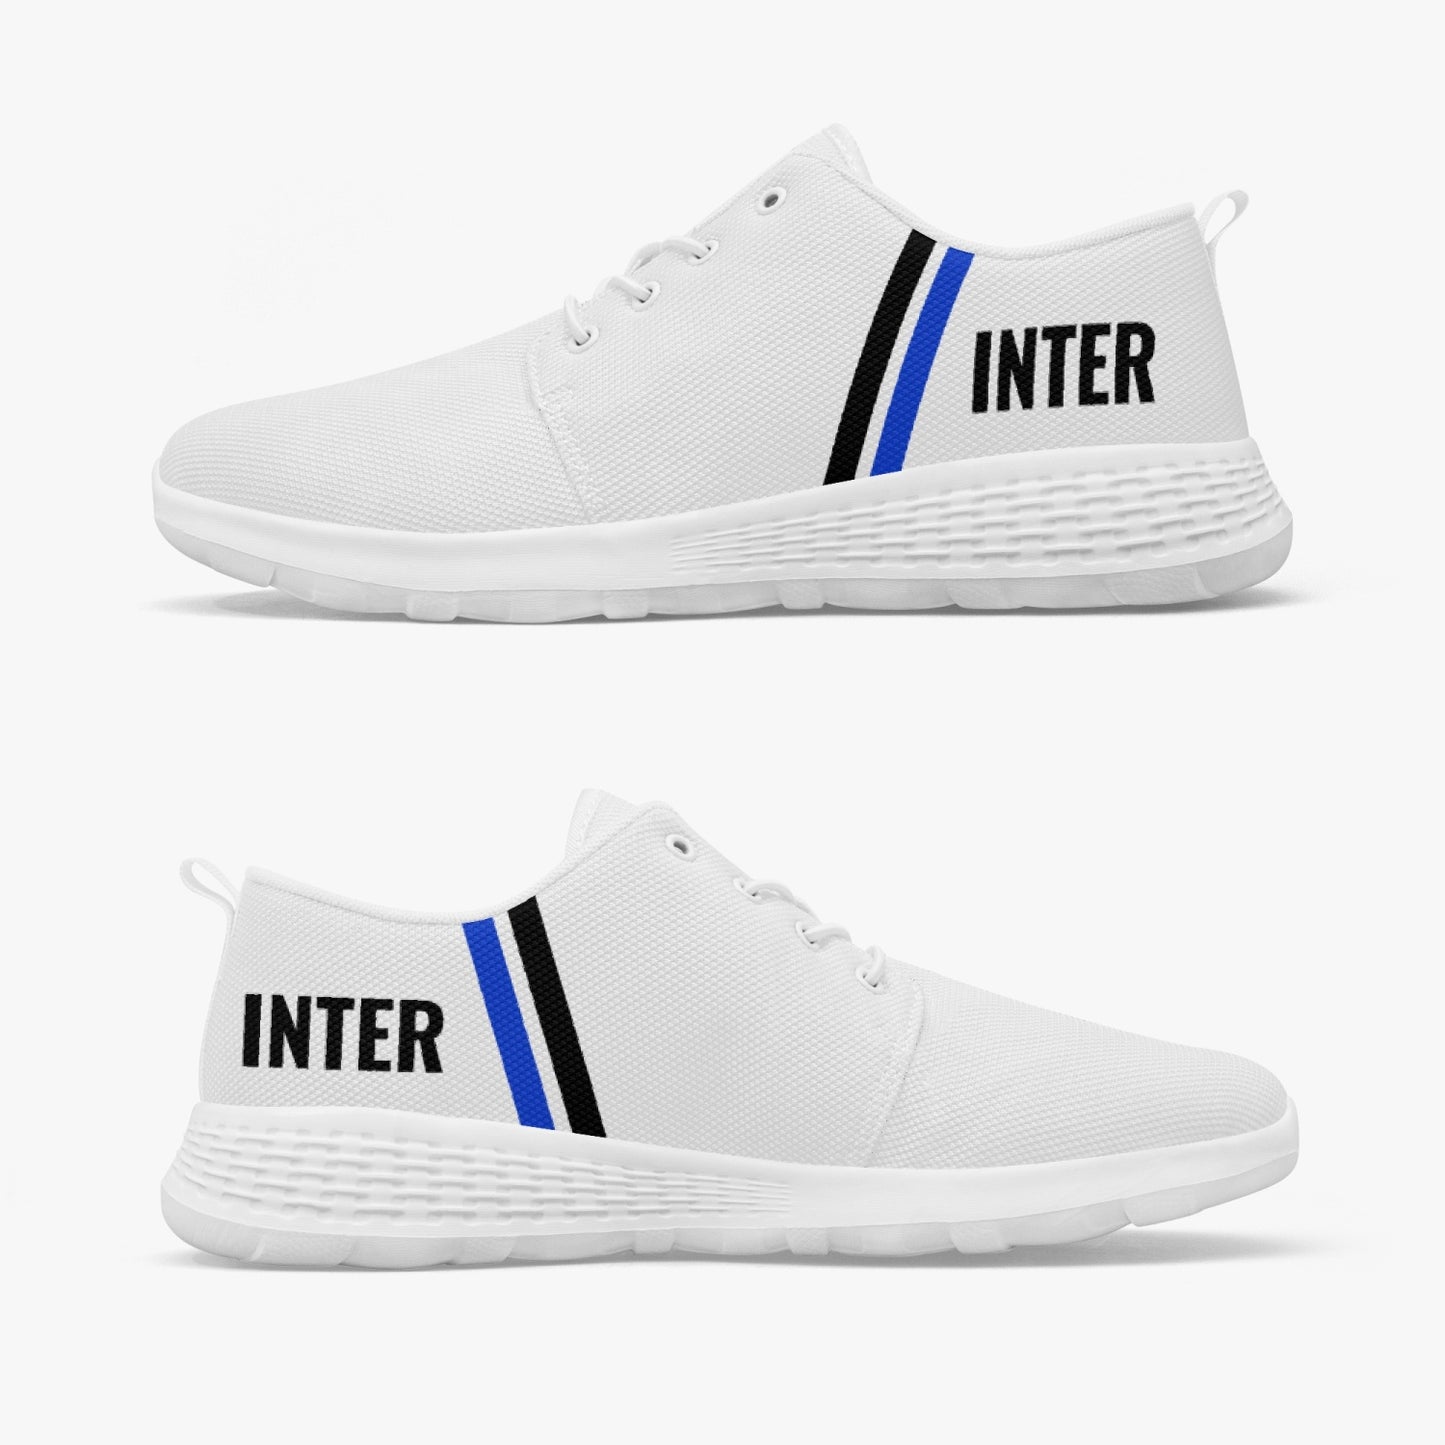 Inter Running Shoes - men's /women's sizes